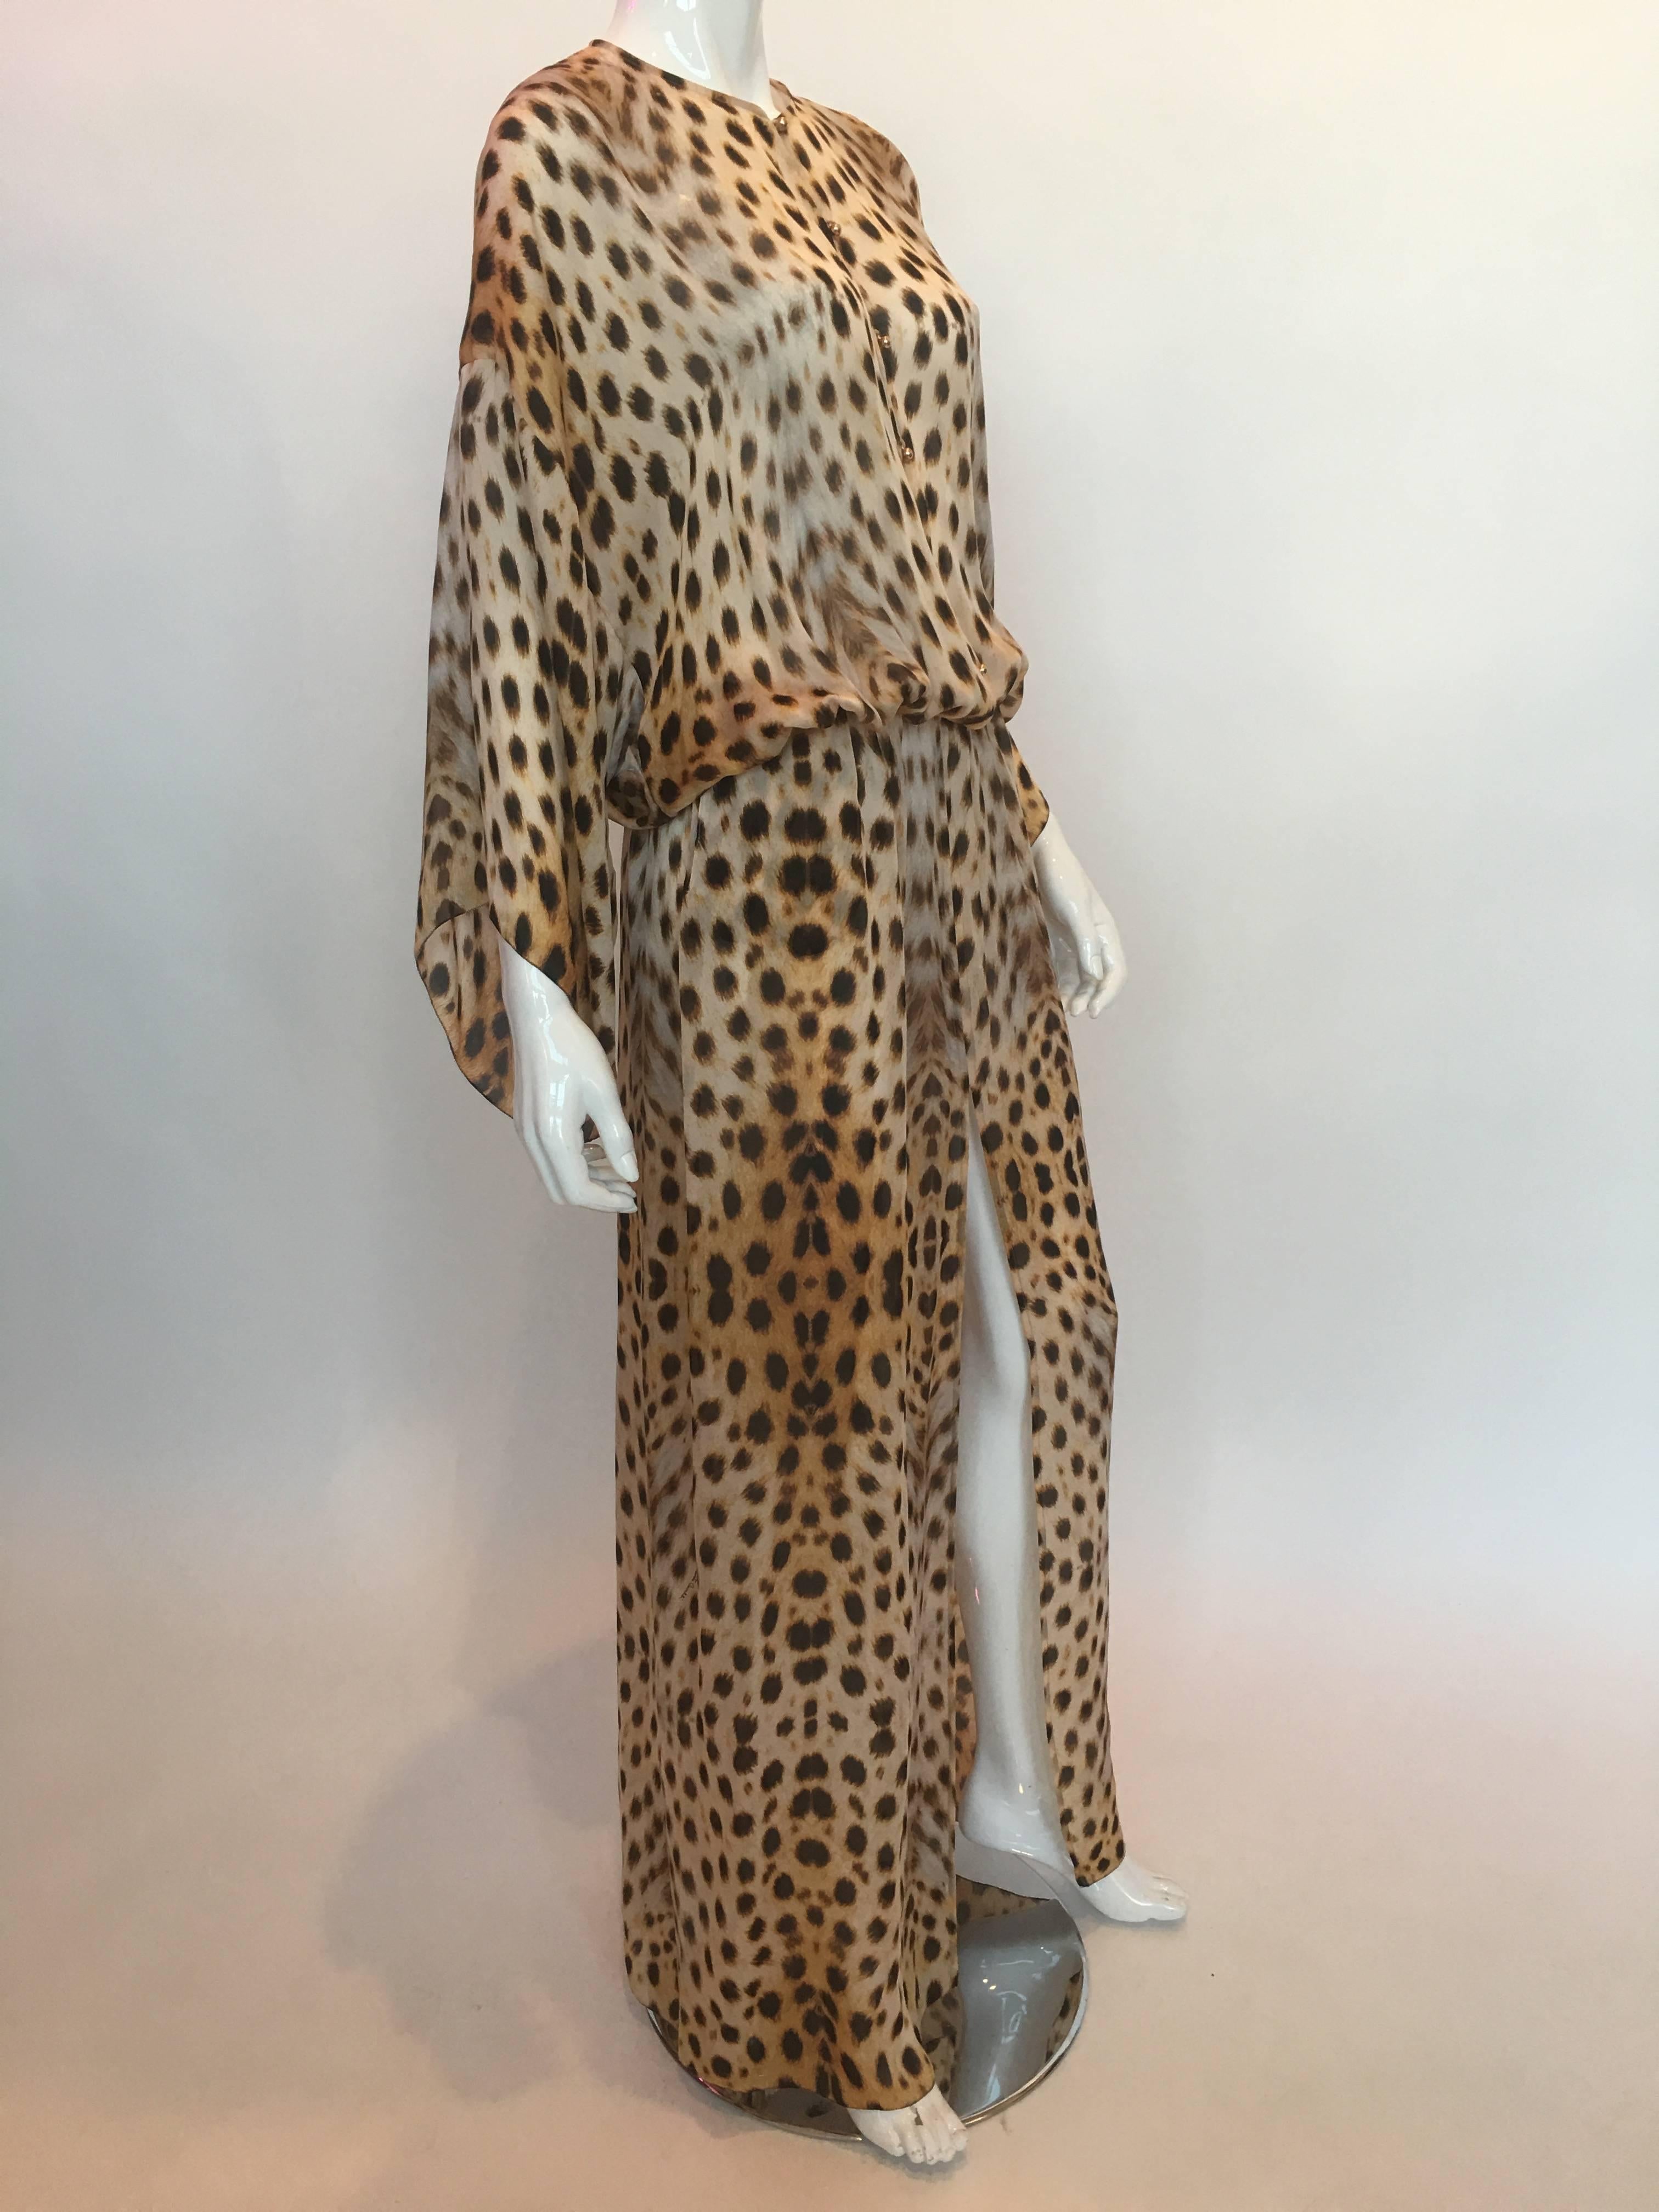 Roberto Cavalli Silk Leopard Print Dress In Good Condition In Los Angeles, CA